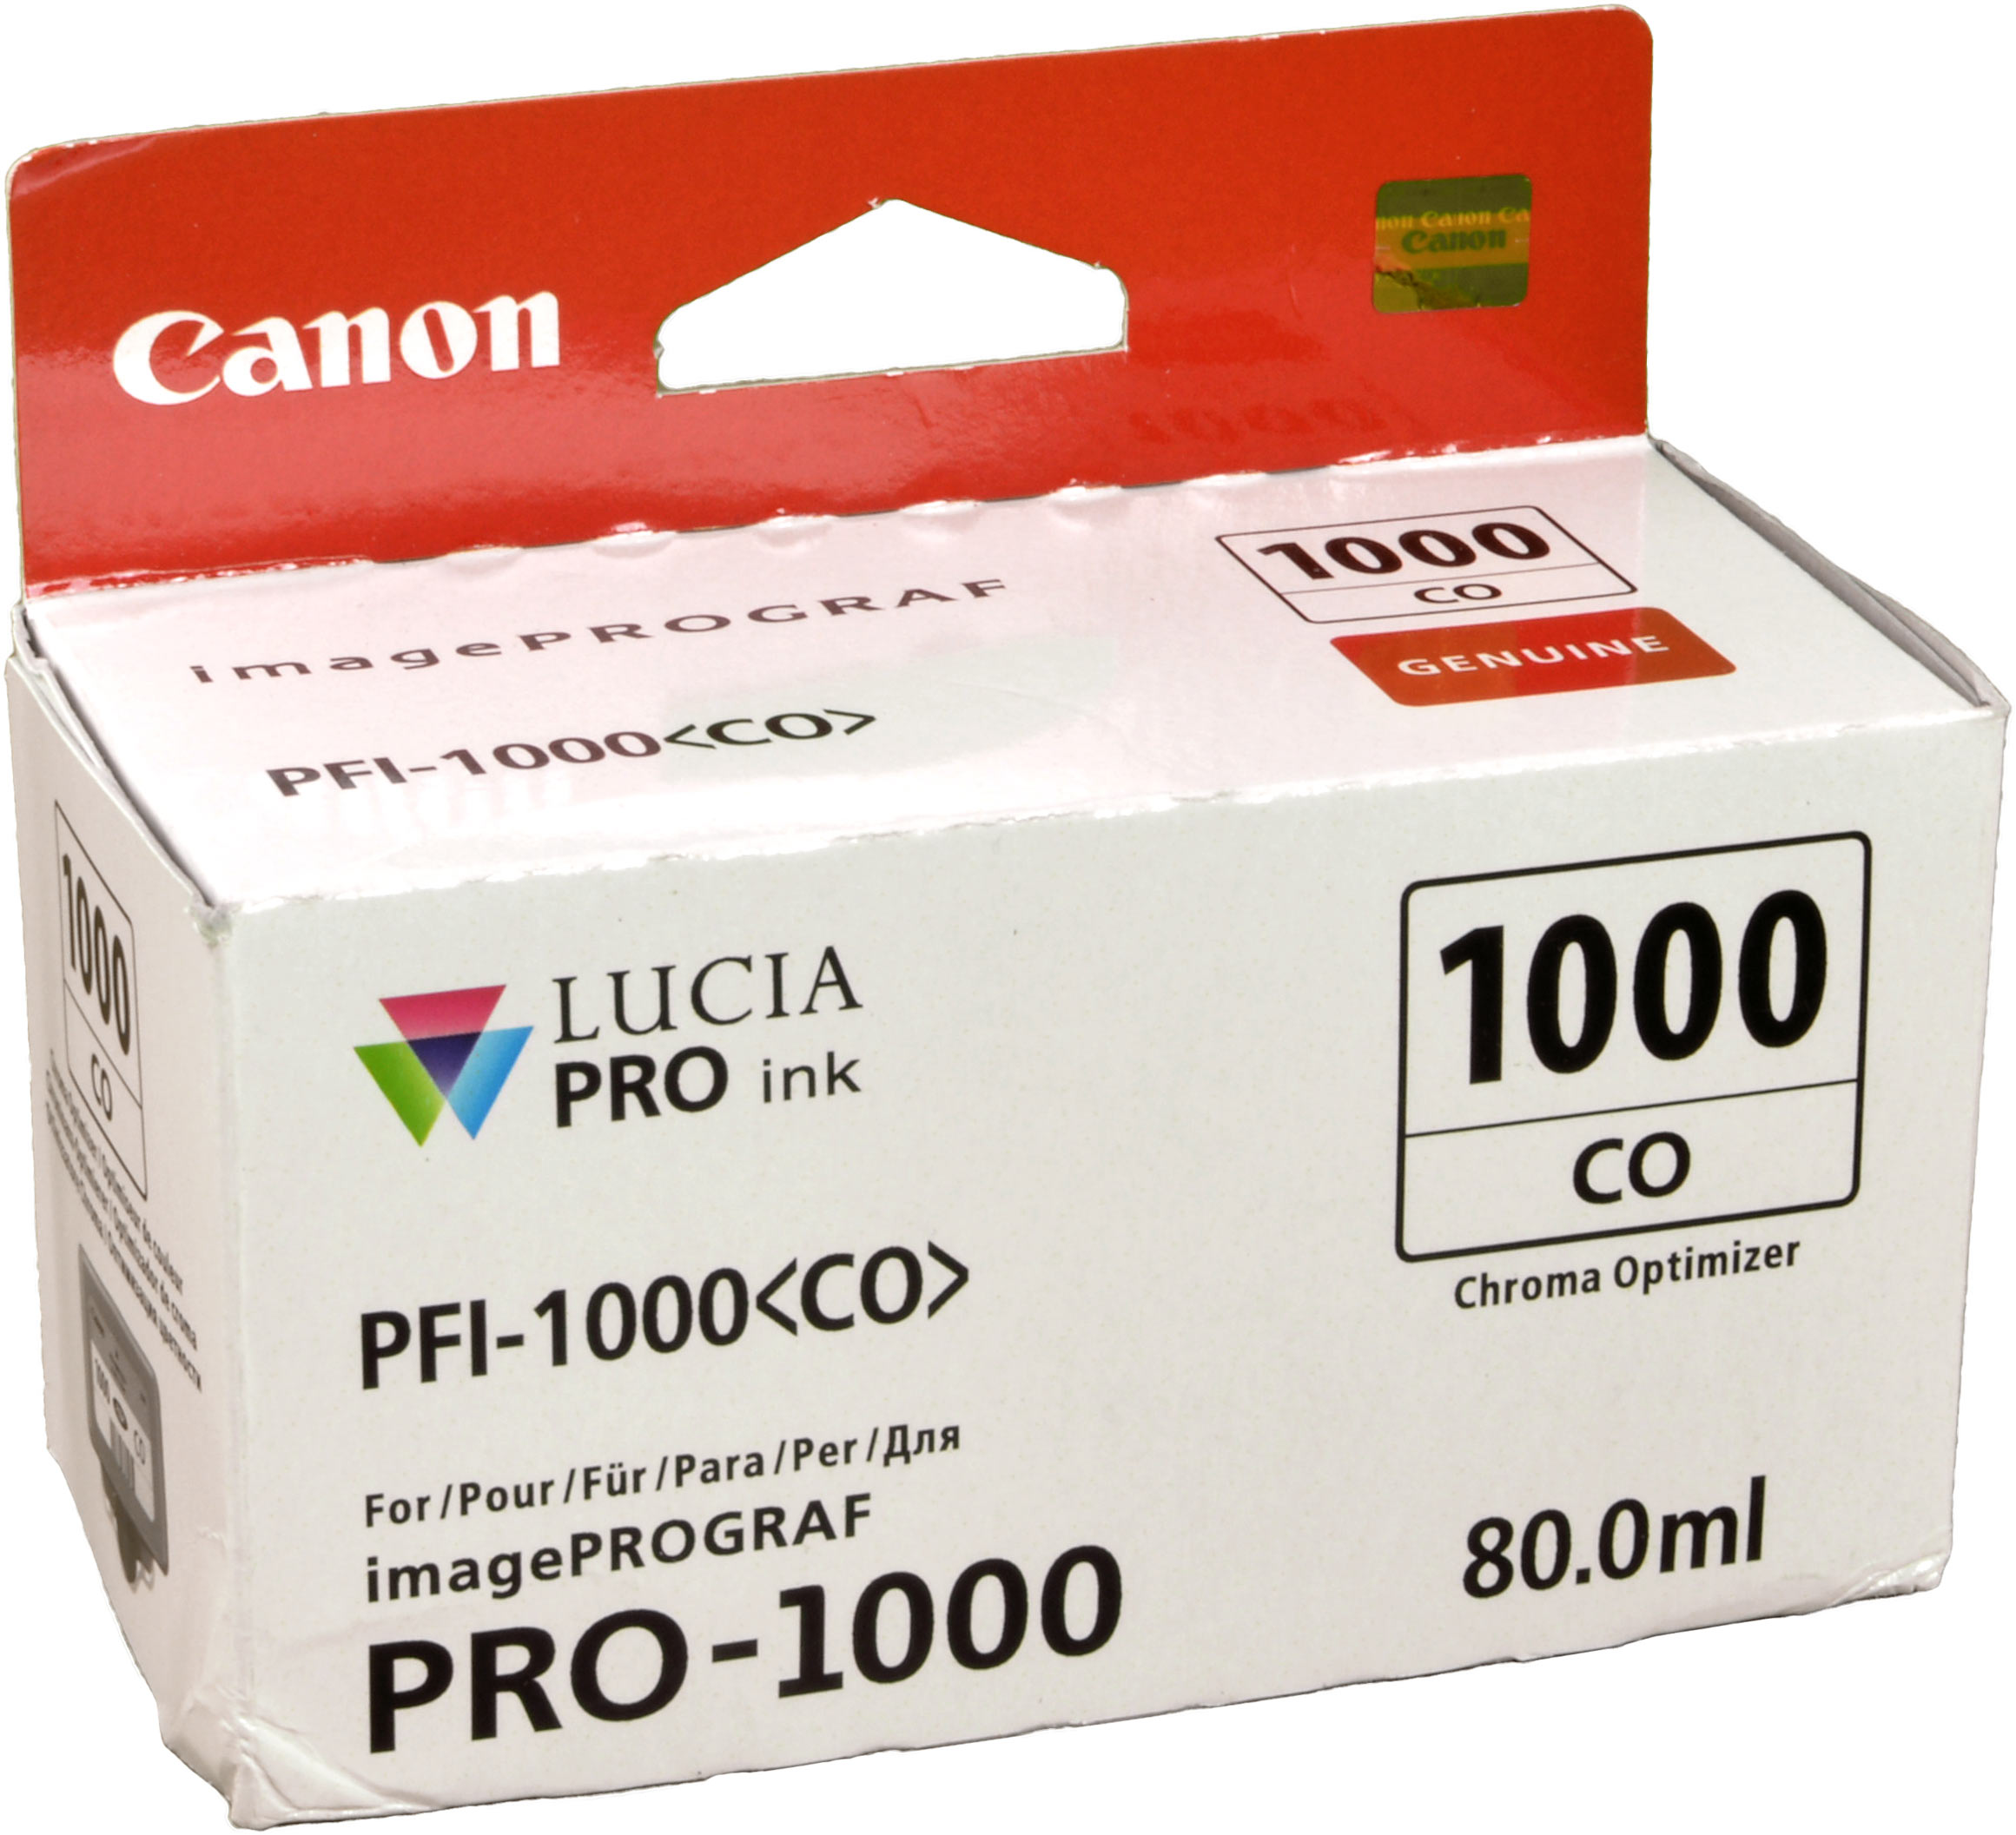 Canon Tinte 0556C001  PFI-1000CO  chroma optimizer